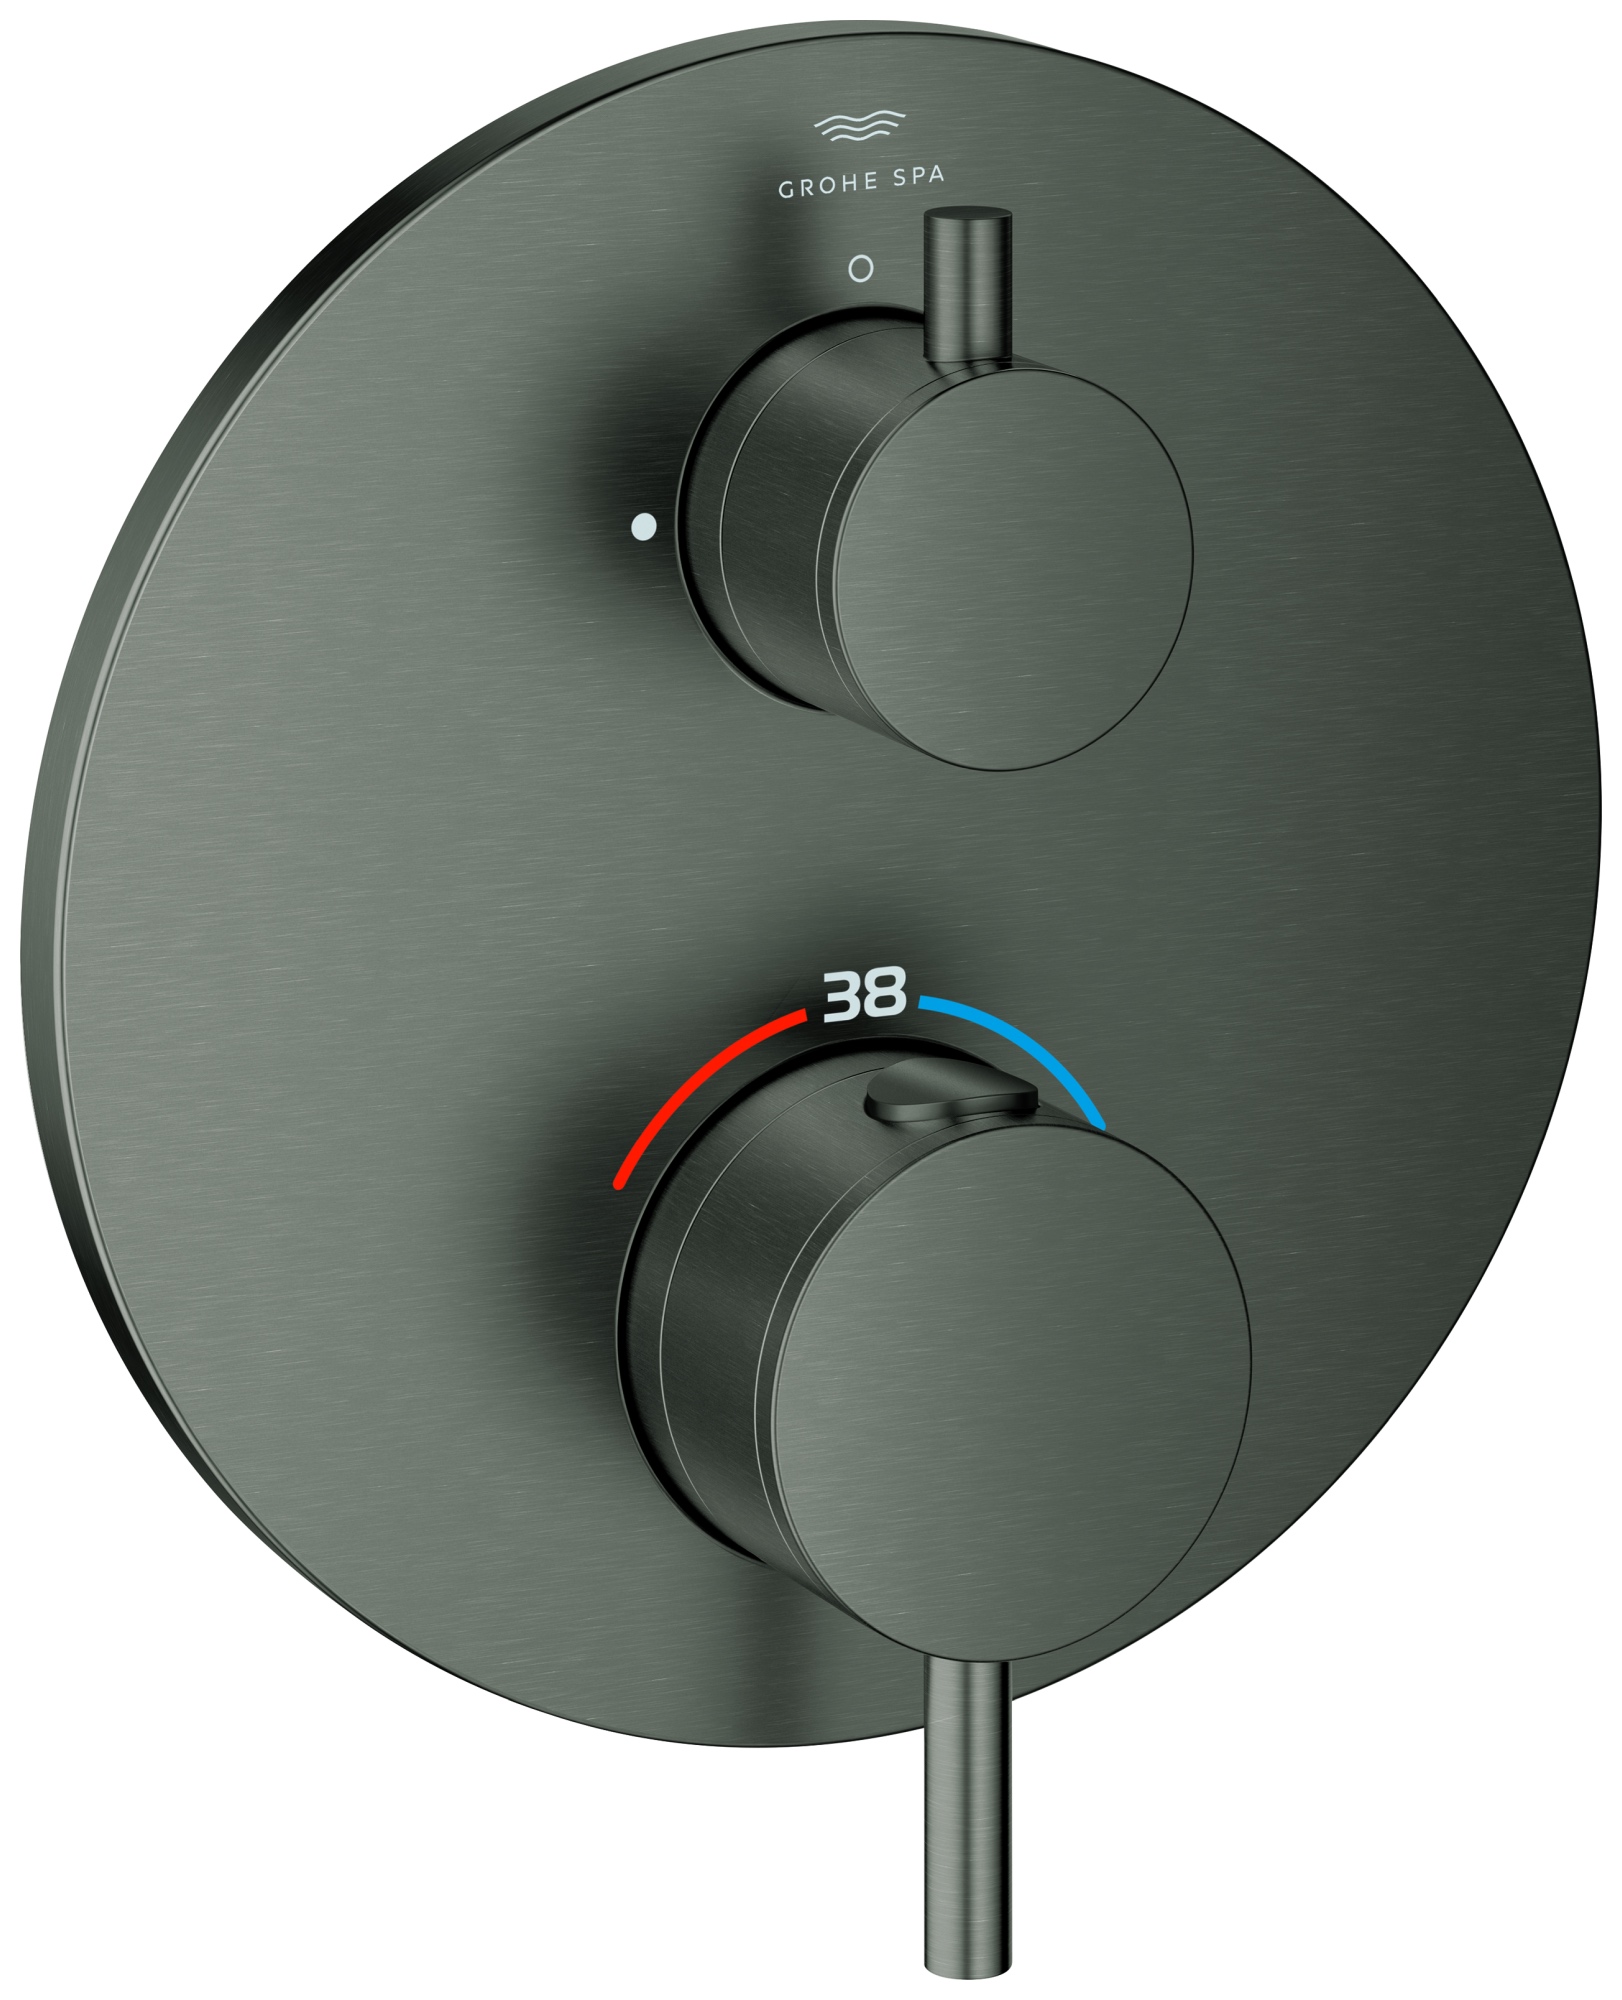 Thermostat-Brausebatterie Atrio 24357, Fertigmontageset für Rapido SmartBox, chrom